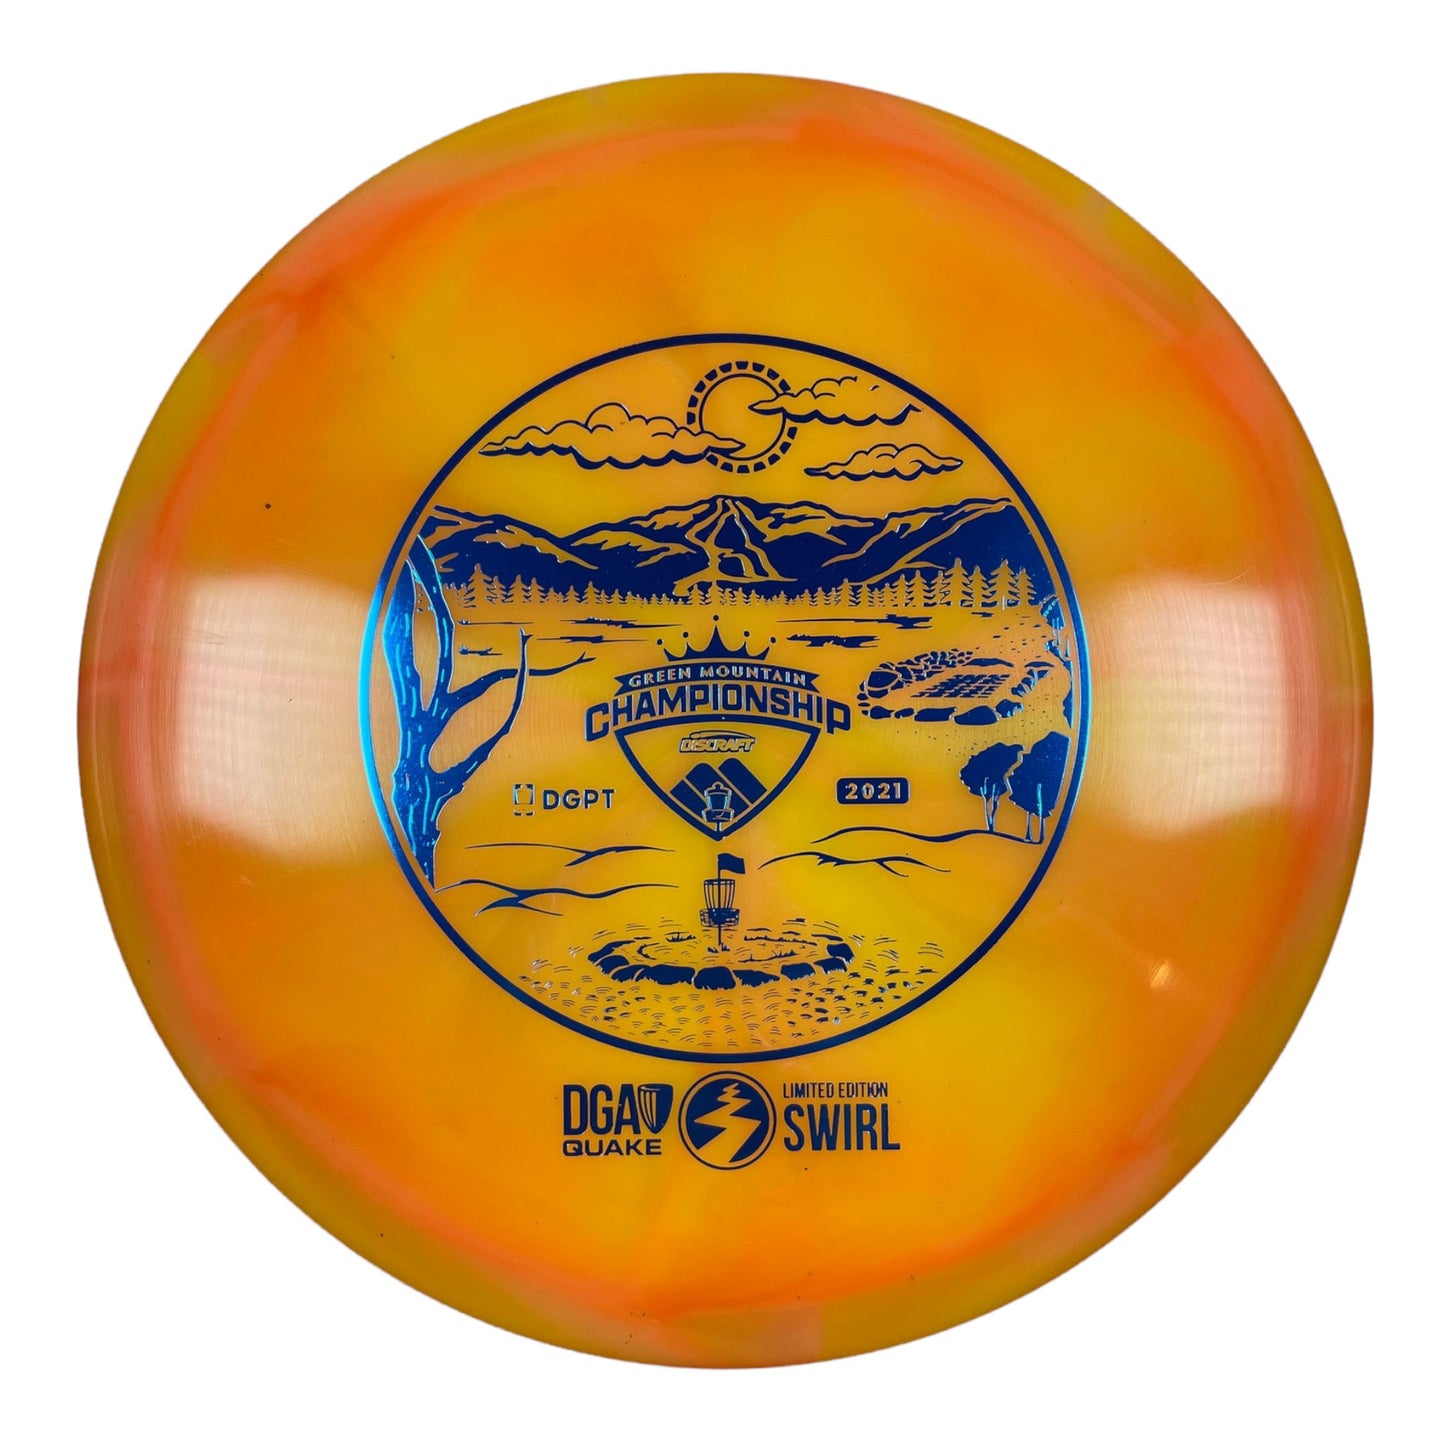 DGA Quake | Swirl | Orange/Blue 177g Disc Golf